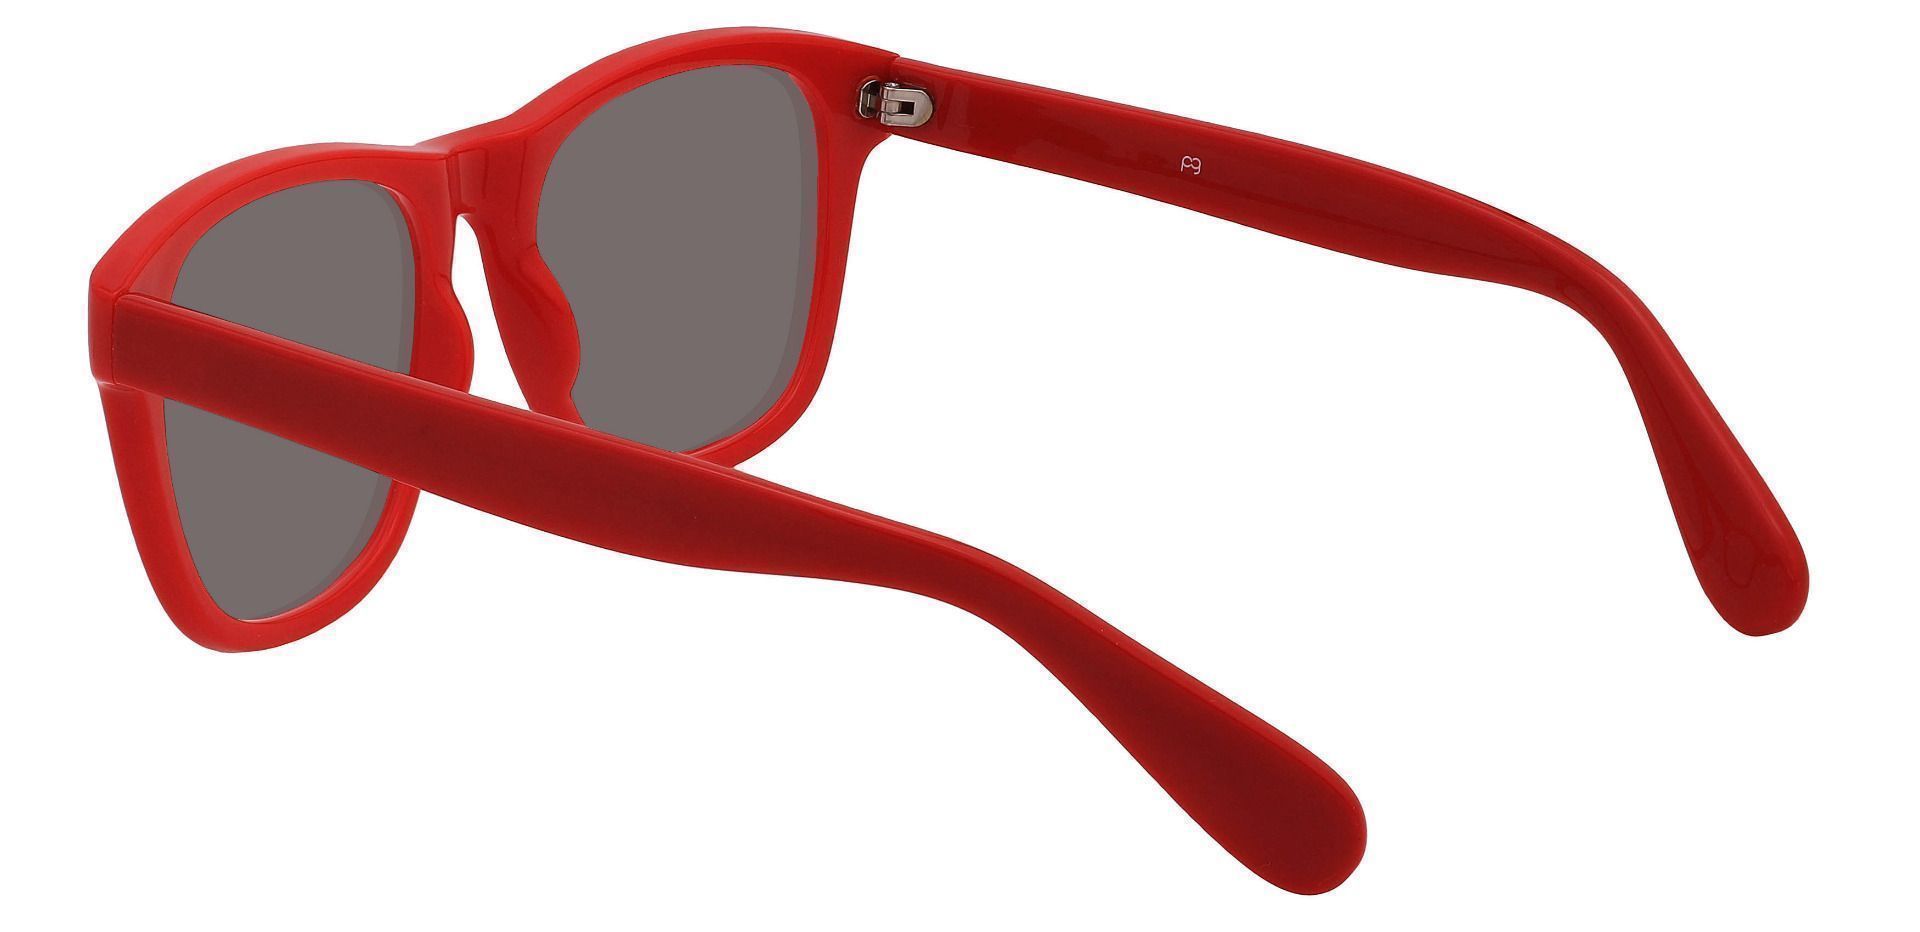 Yolanda Square Reading Sunglasses - Red Frame With Gray Lenses